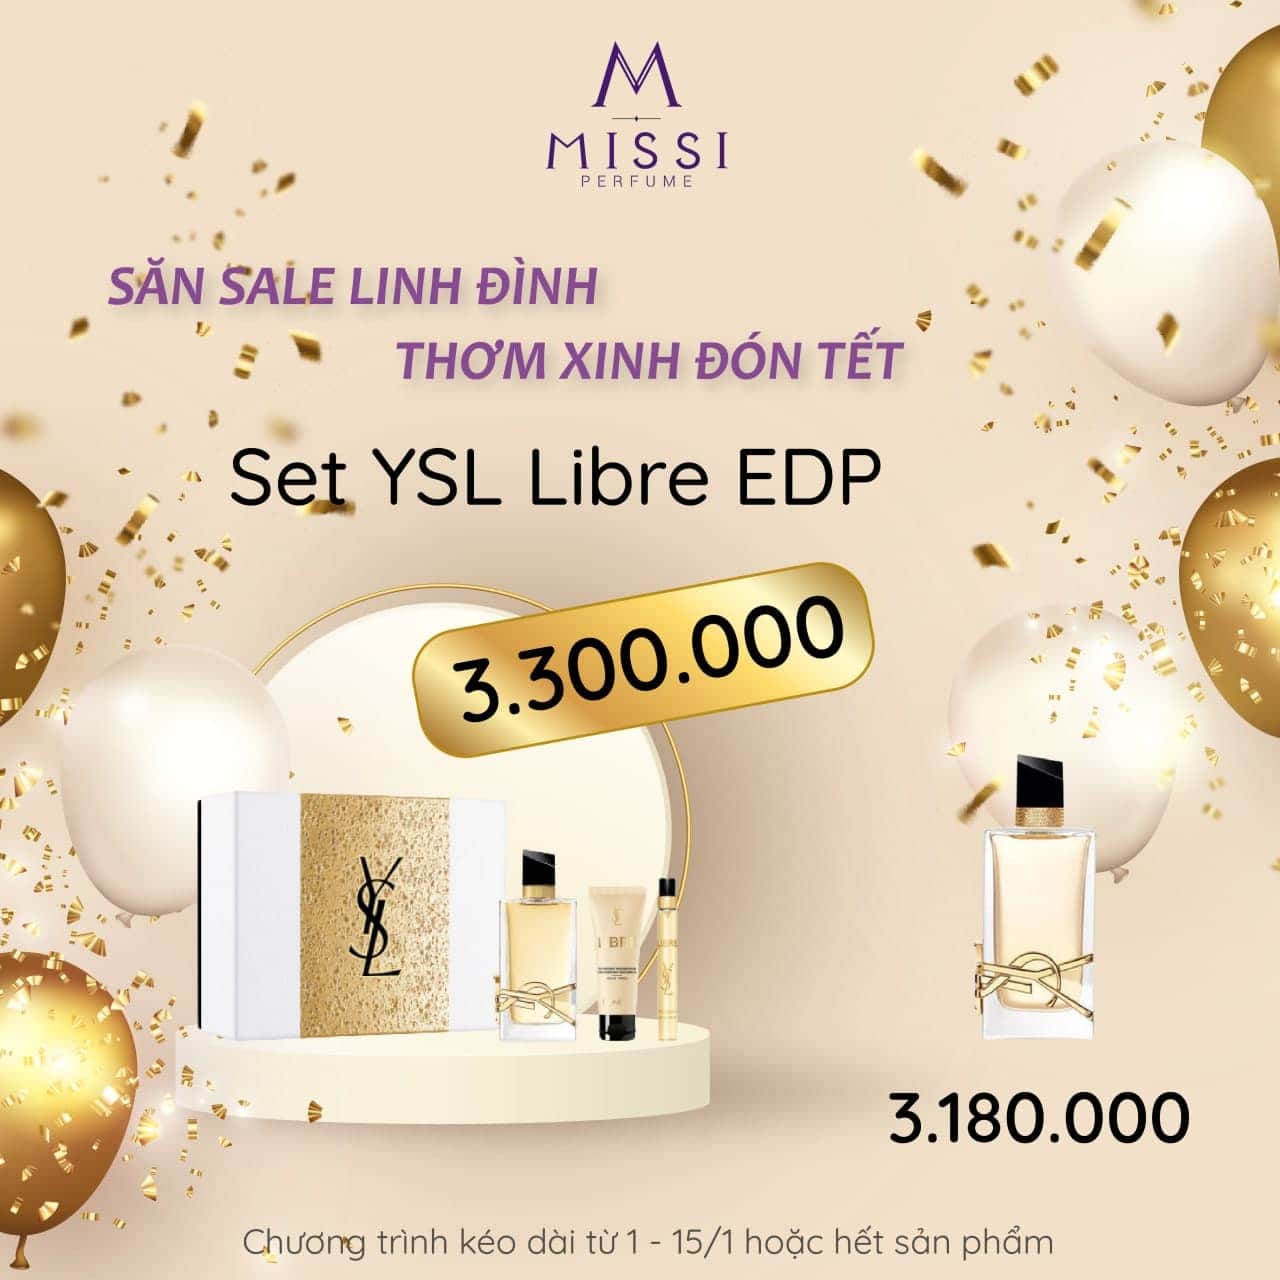 Set YSL Libre 90ml Missi Perfume